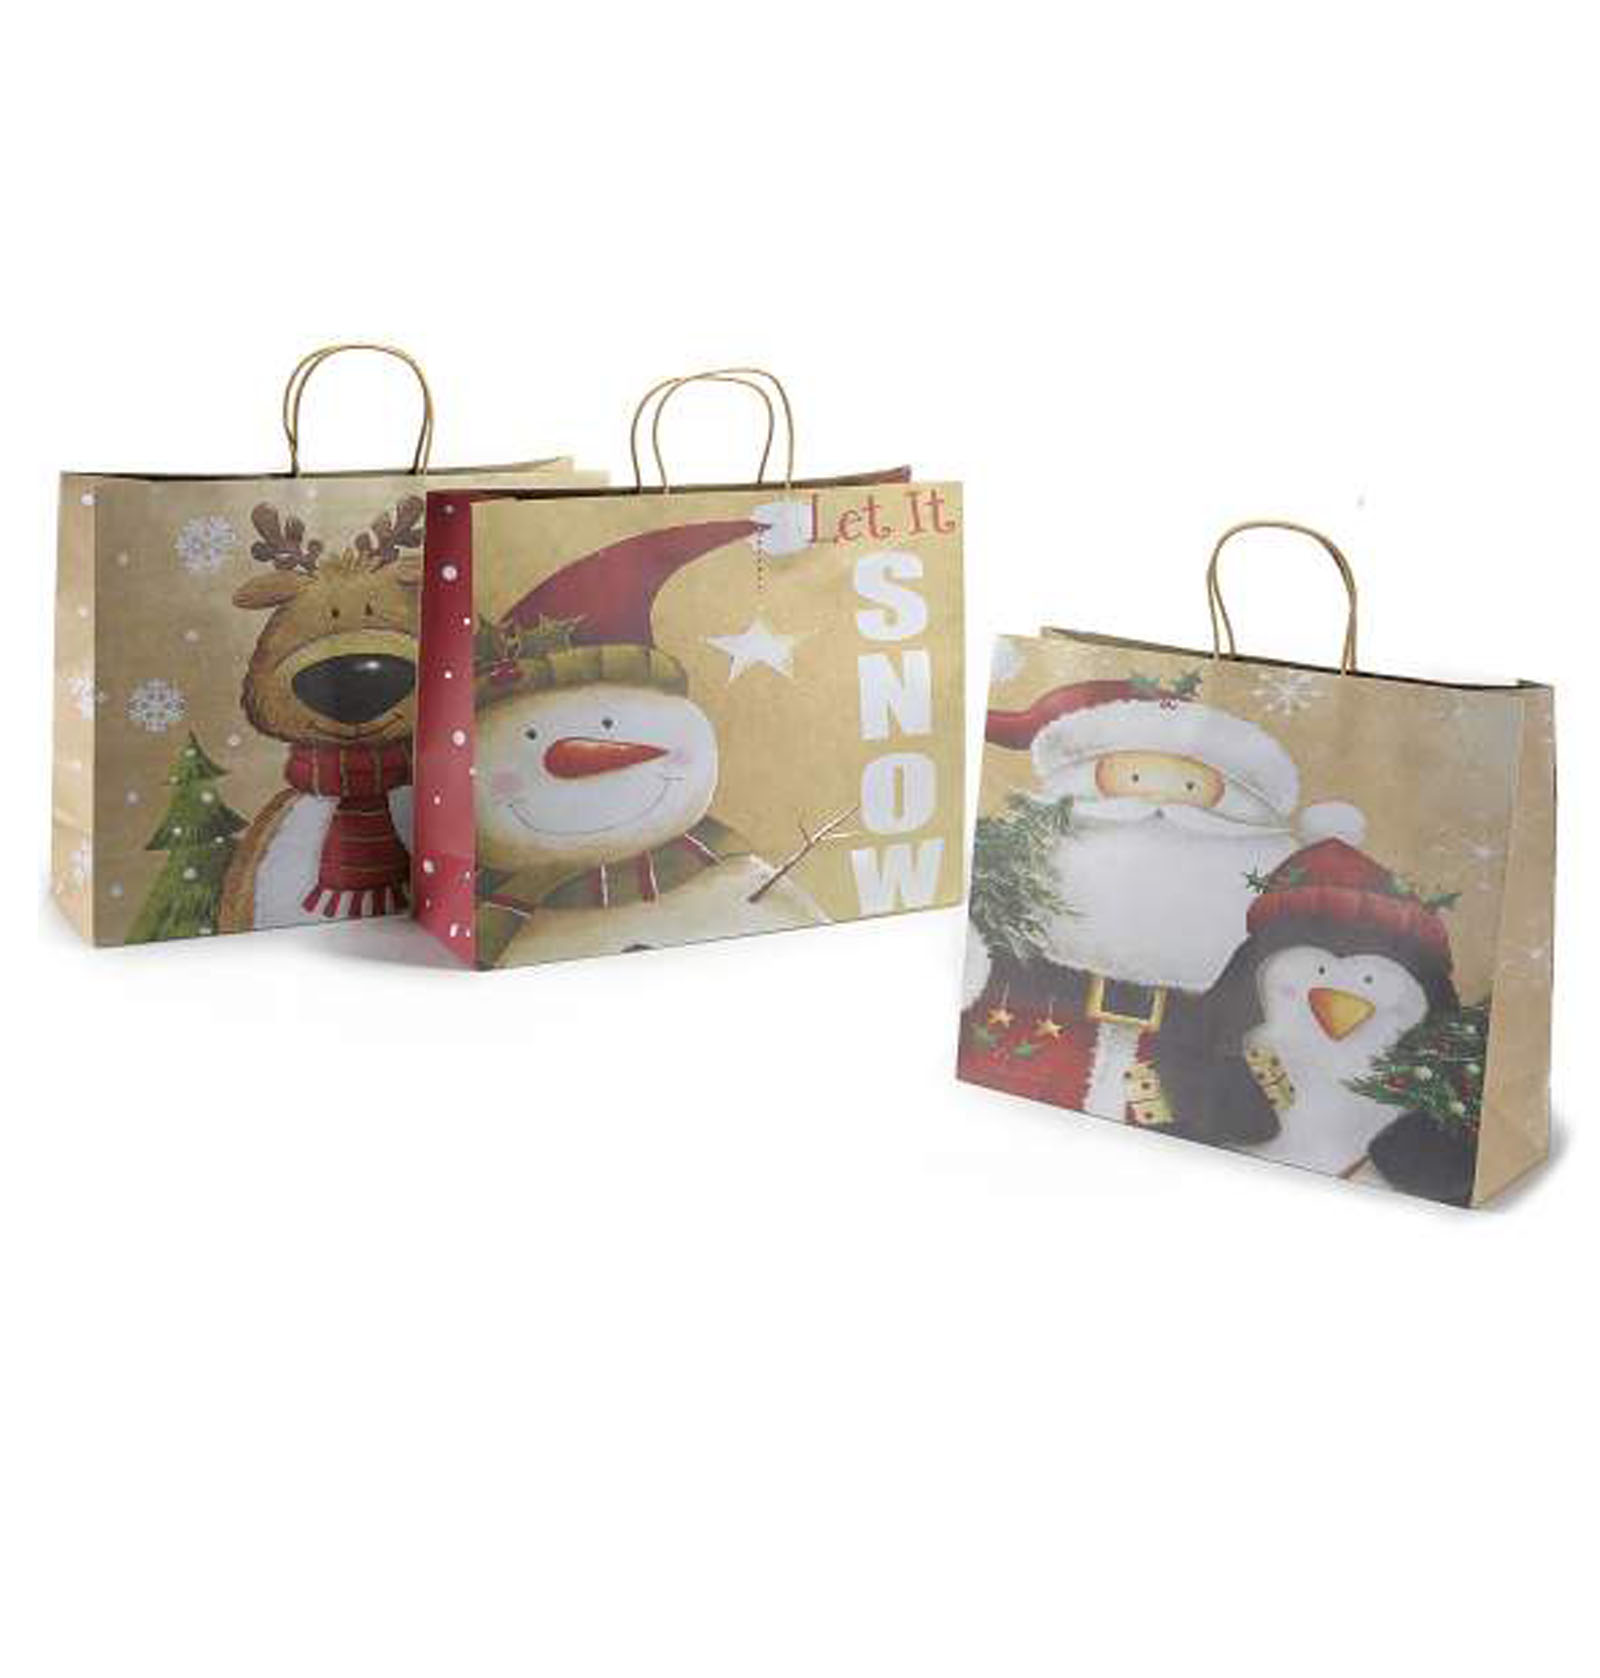 18Pz. Busta sacchetto regalo in carta naturale con stampe natalizie  Misure: cm 45 x 12,5 x 33 H (C/manici43)